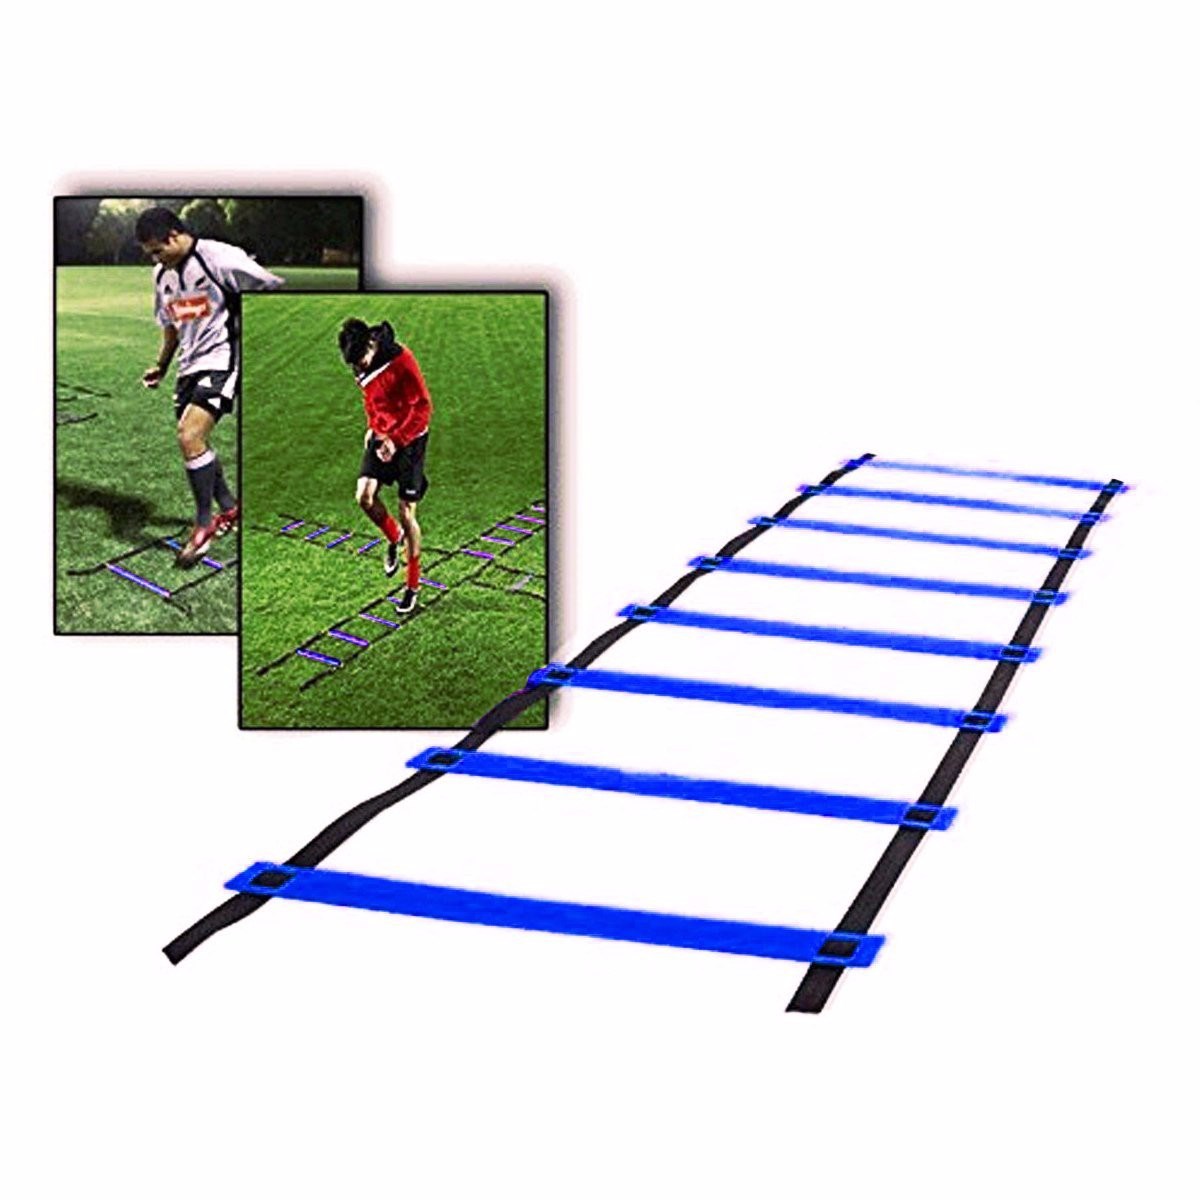 CAMTOA-4m-8-Rung-Training-Ladder-Soccer-Basketball-Speed-Training-Ladder-Outdoor-Indoor-Sports-Train-1886067-16